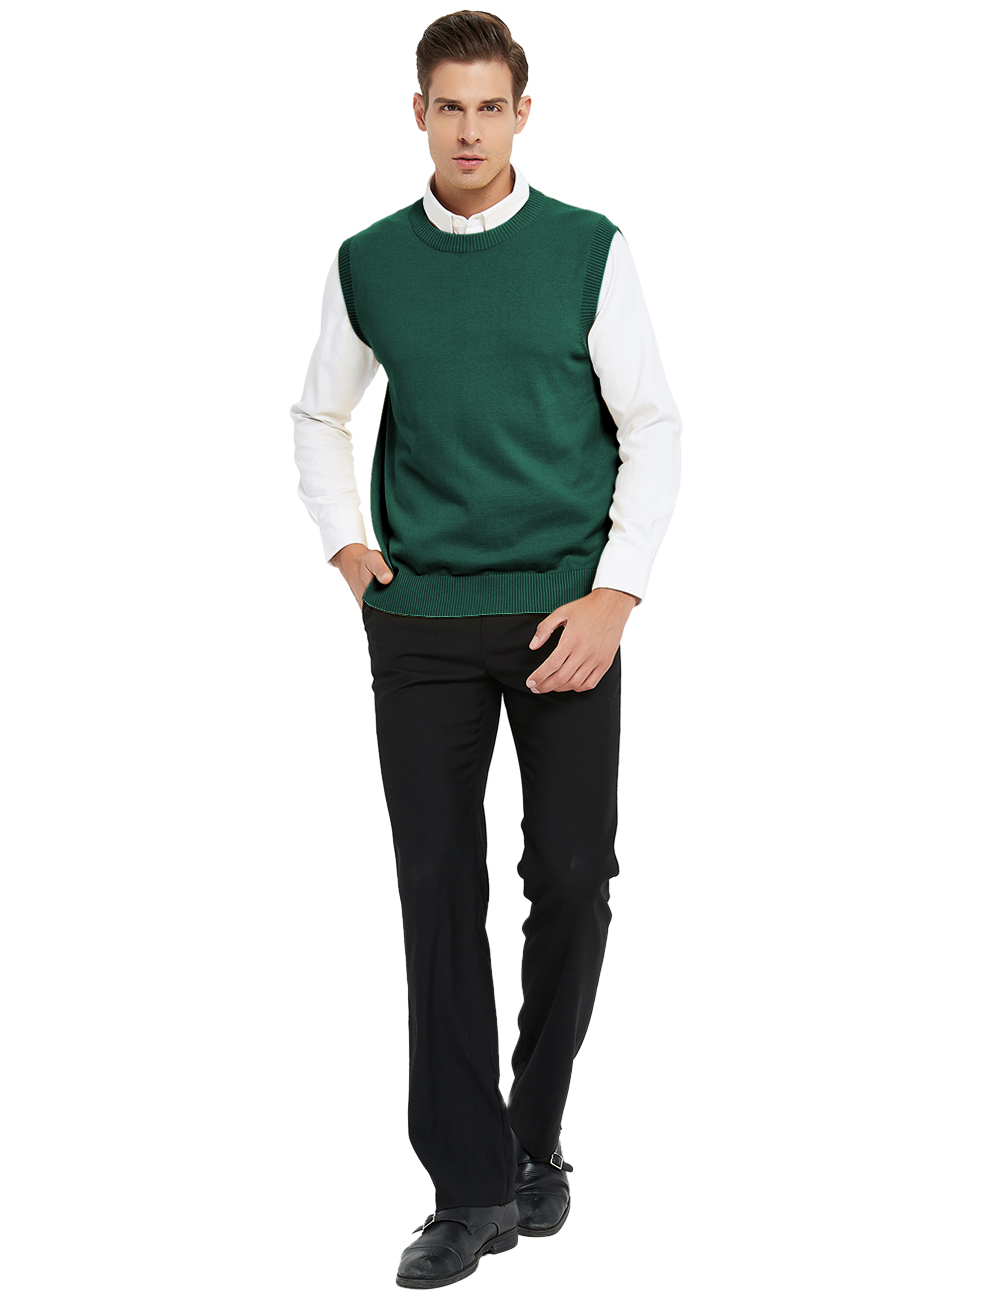 Toptie Men's Business Sweater Vest Cotton Jumper Top-Green-S - image 4 of 7